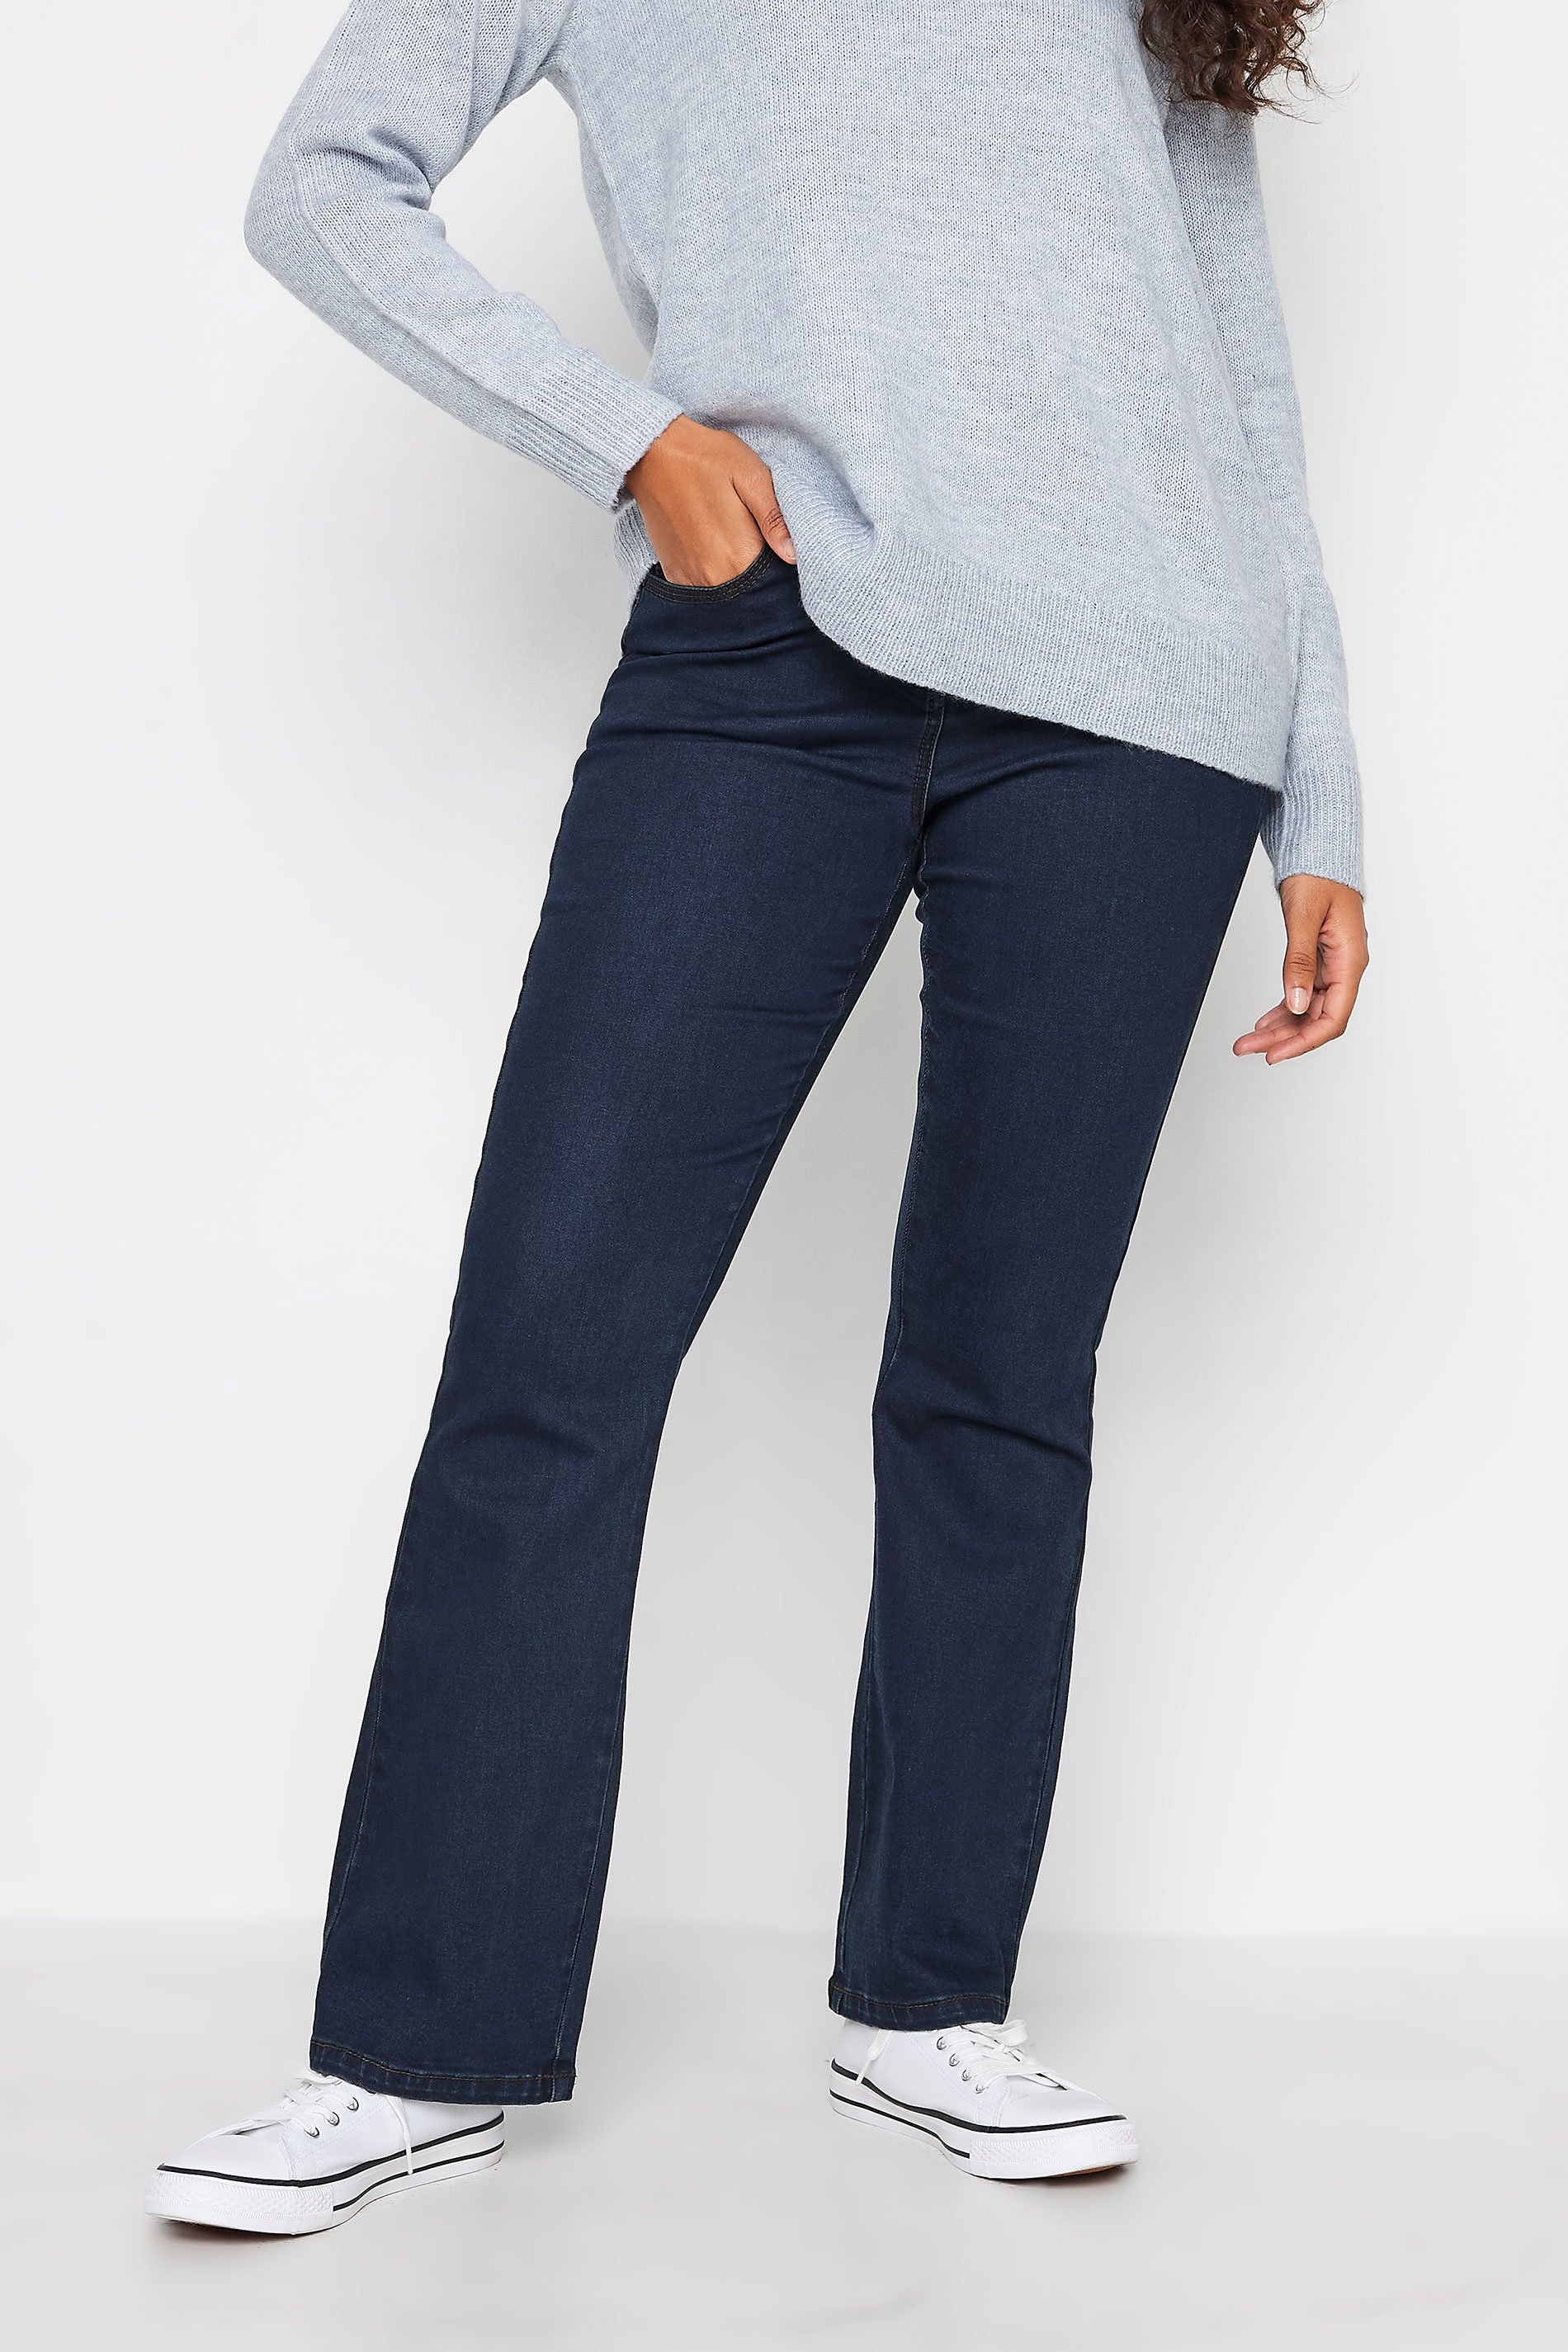 M&Co Indigo Blue Straight Leg Jeans | M&Co 2